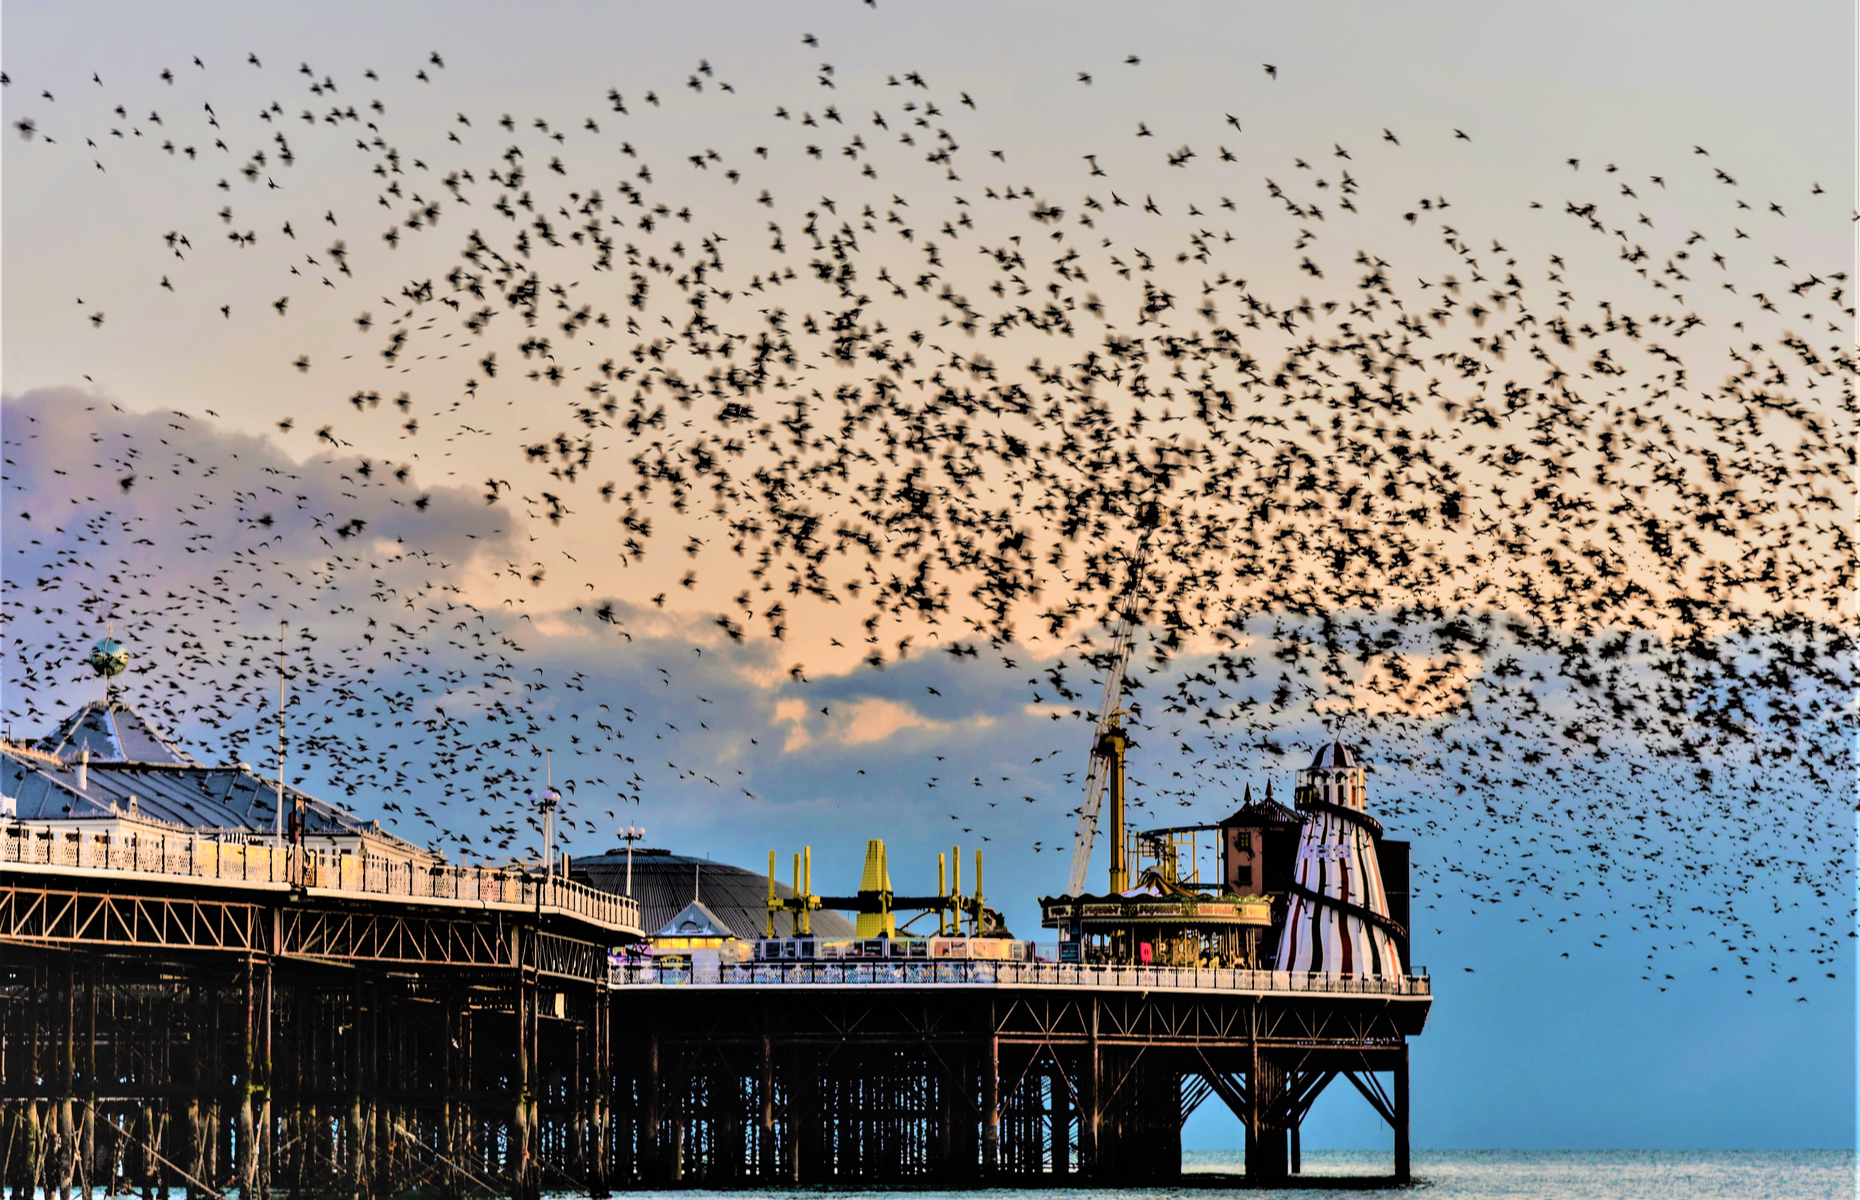 Brighton Palace Pier starling murmation (Image: Brightonpics/Shutterstock)